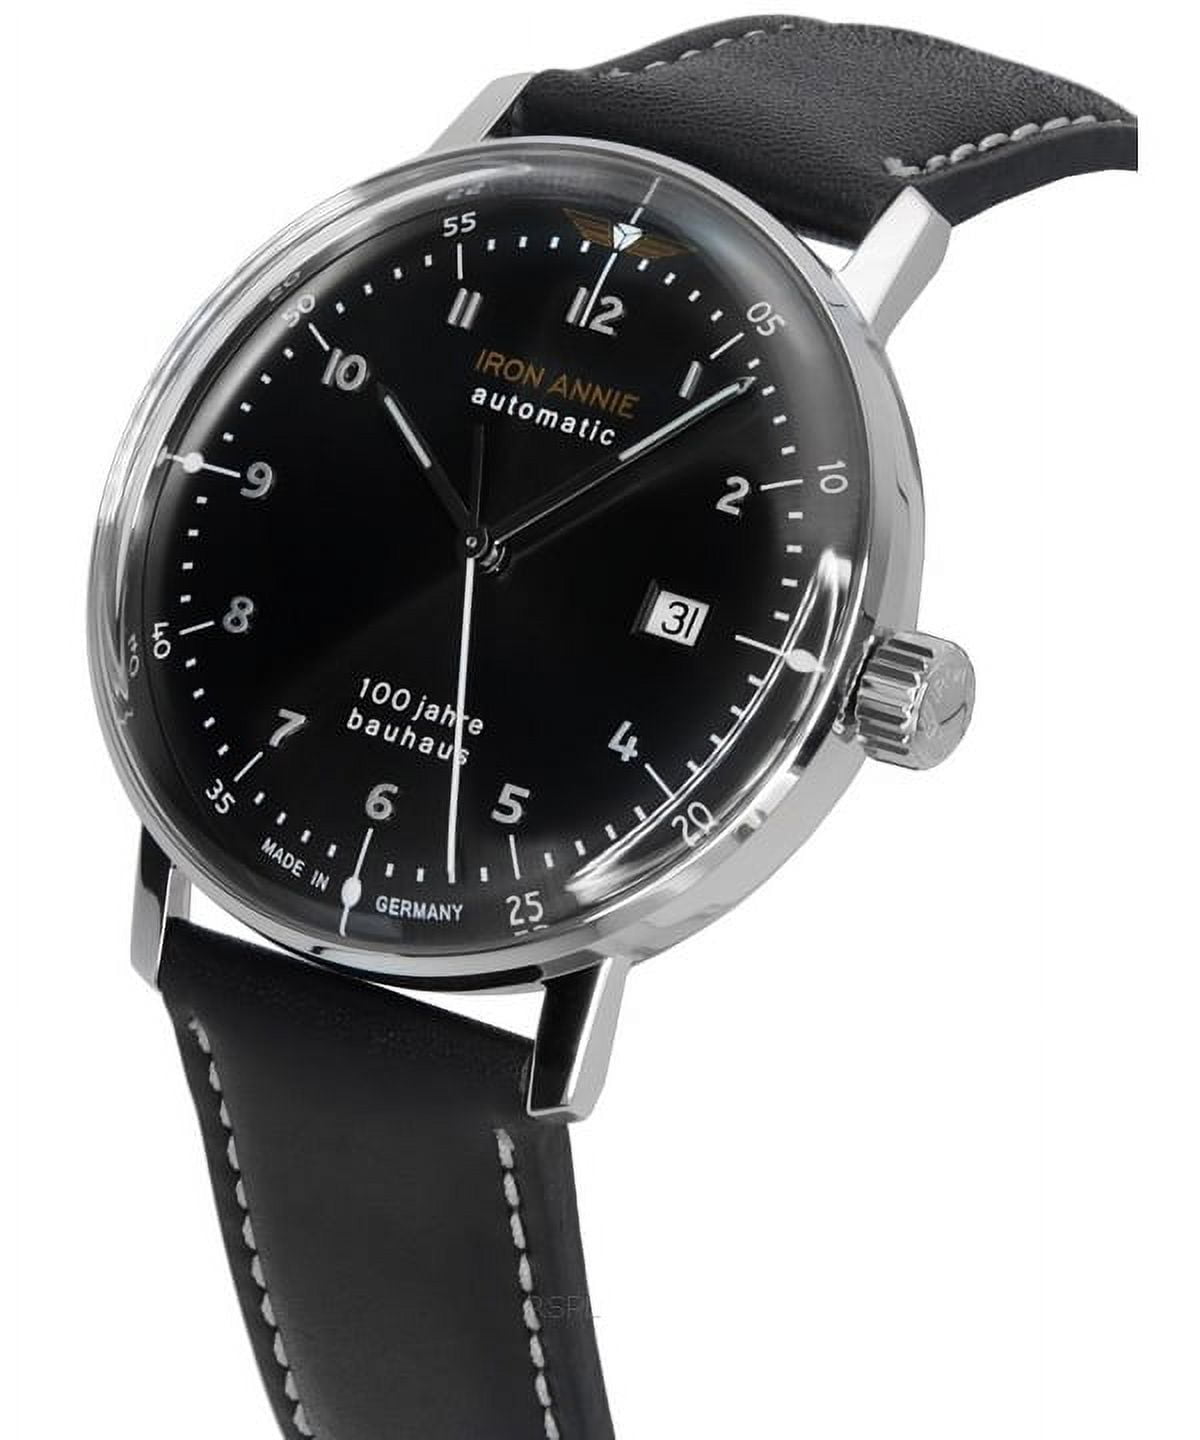 Iron Annie 100 Jahre Bauhaus Leather Strap Black Dial Automatic 50562 Men\'s  Watch